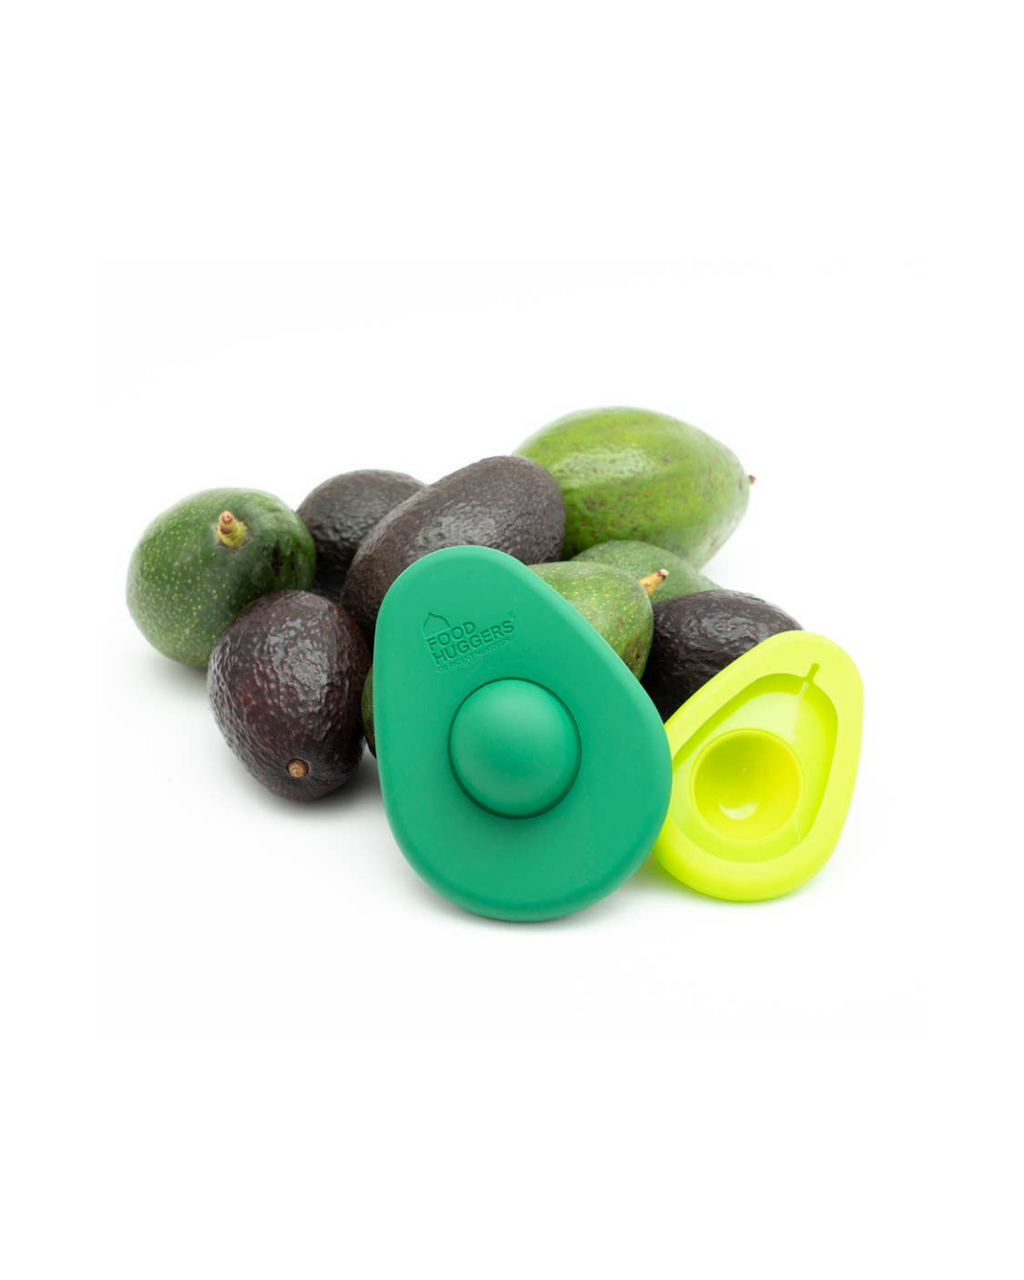  Food Huggers Avocado Huggers 2pc Silicone Reusable Avocado  Savers with Pit Storage, BPA Free, Dishwasher Safe Holder